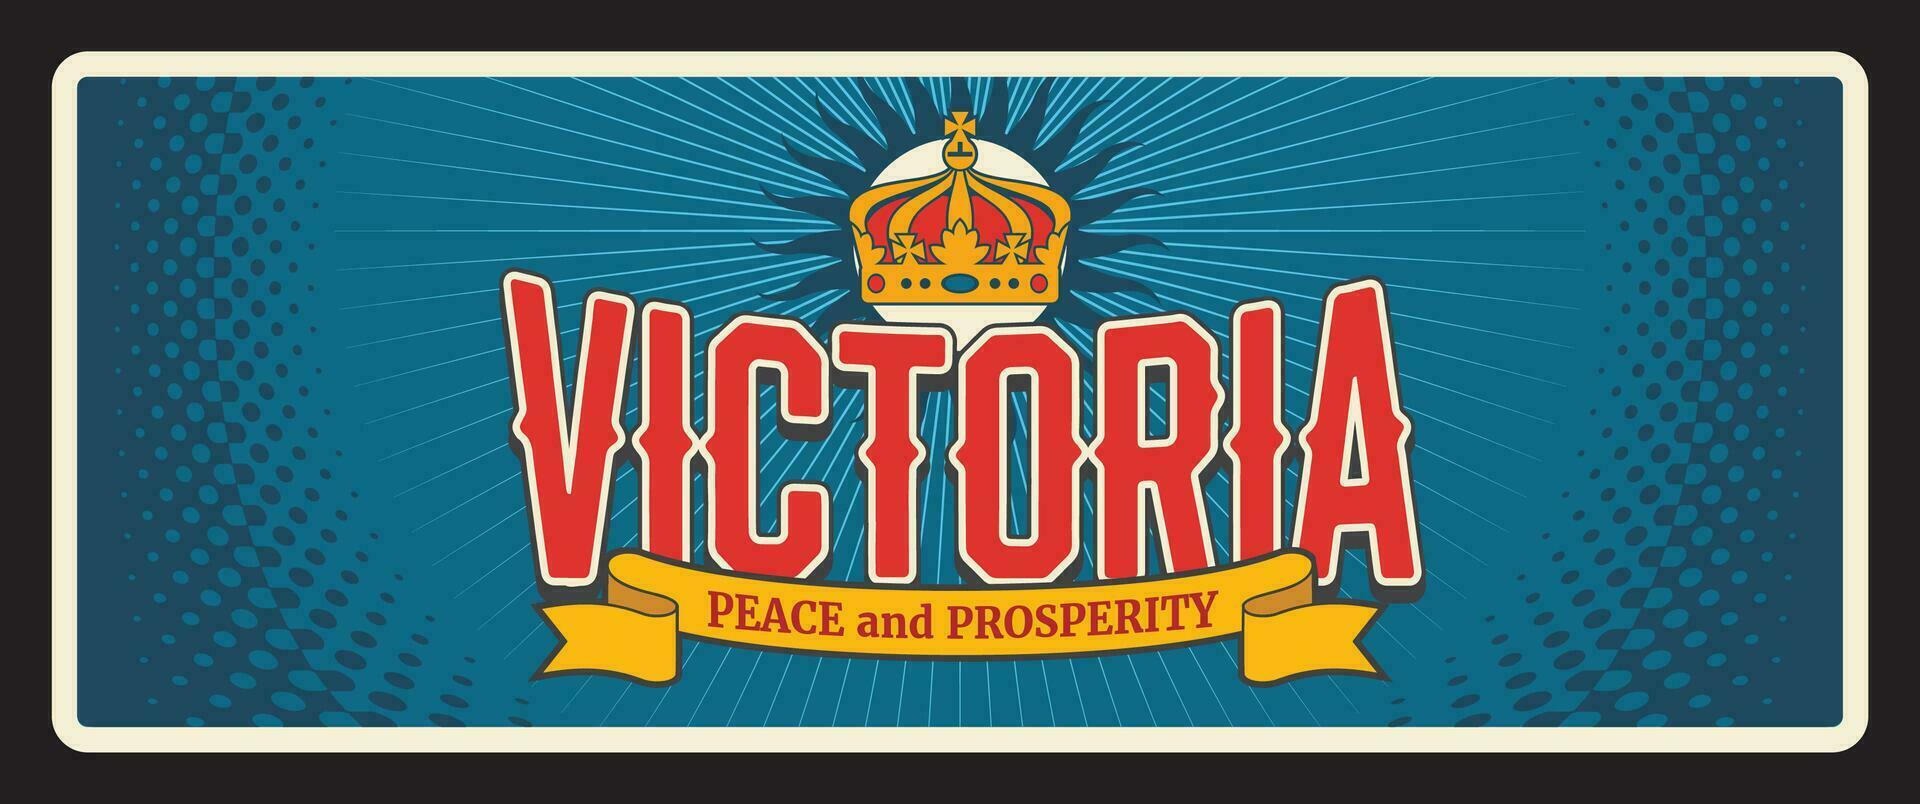 Australia Victoria state vintage travel plate vector